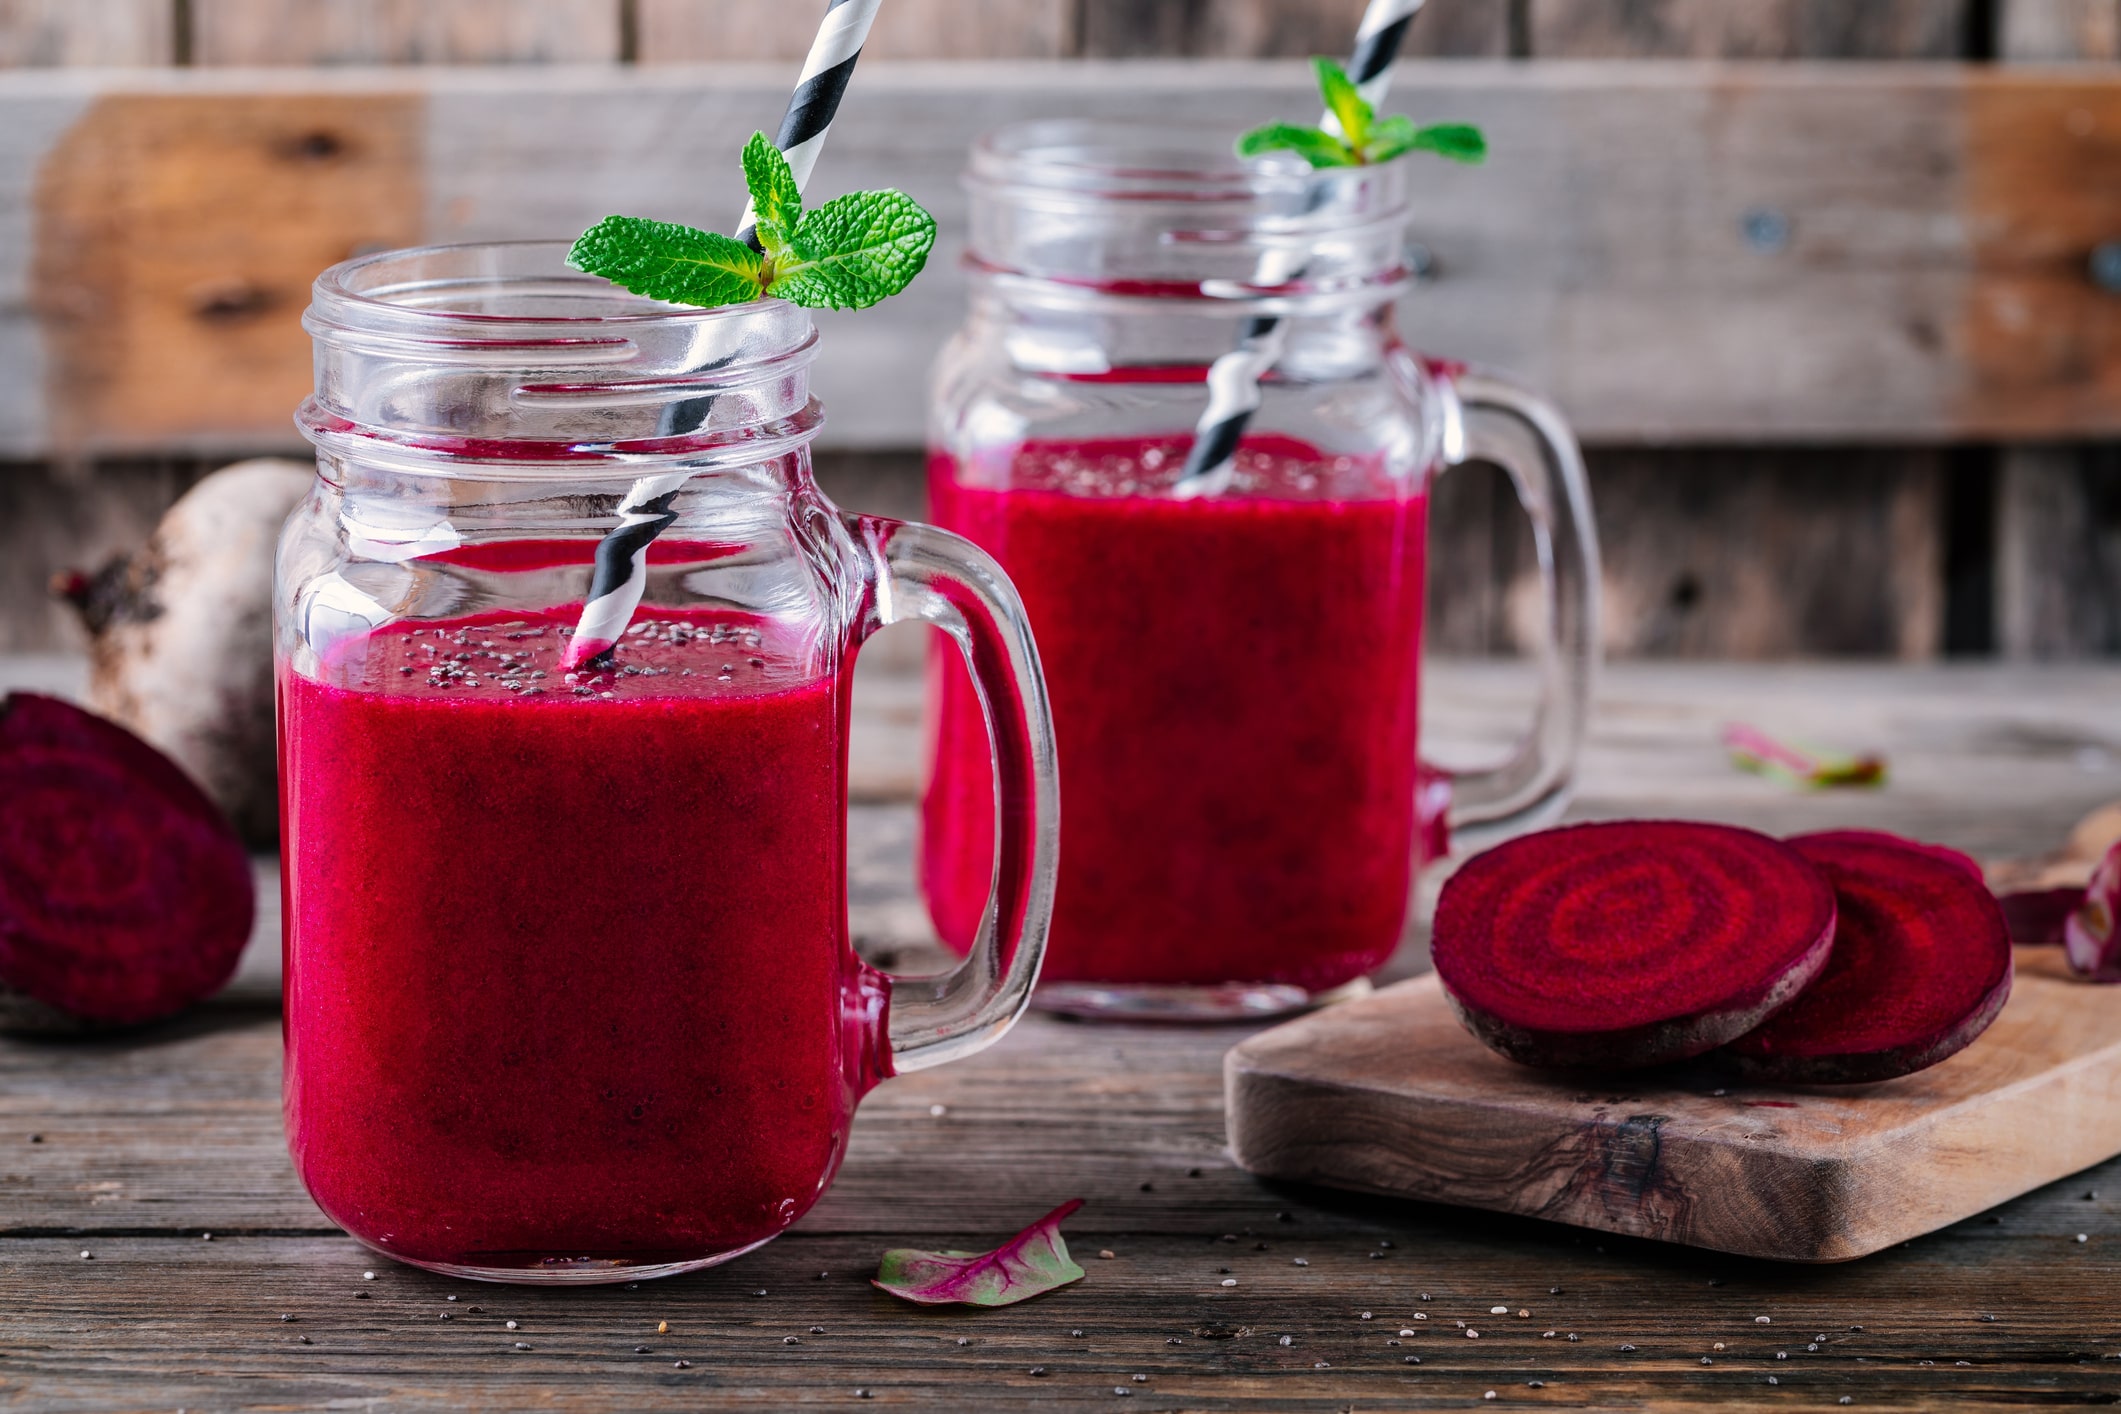 Beetroot Juice May Reduce Salt-Induced High Blood Pressure